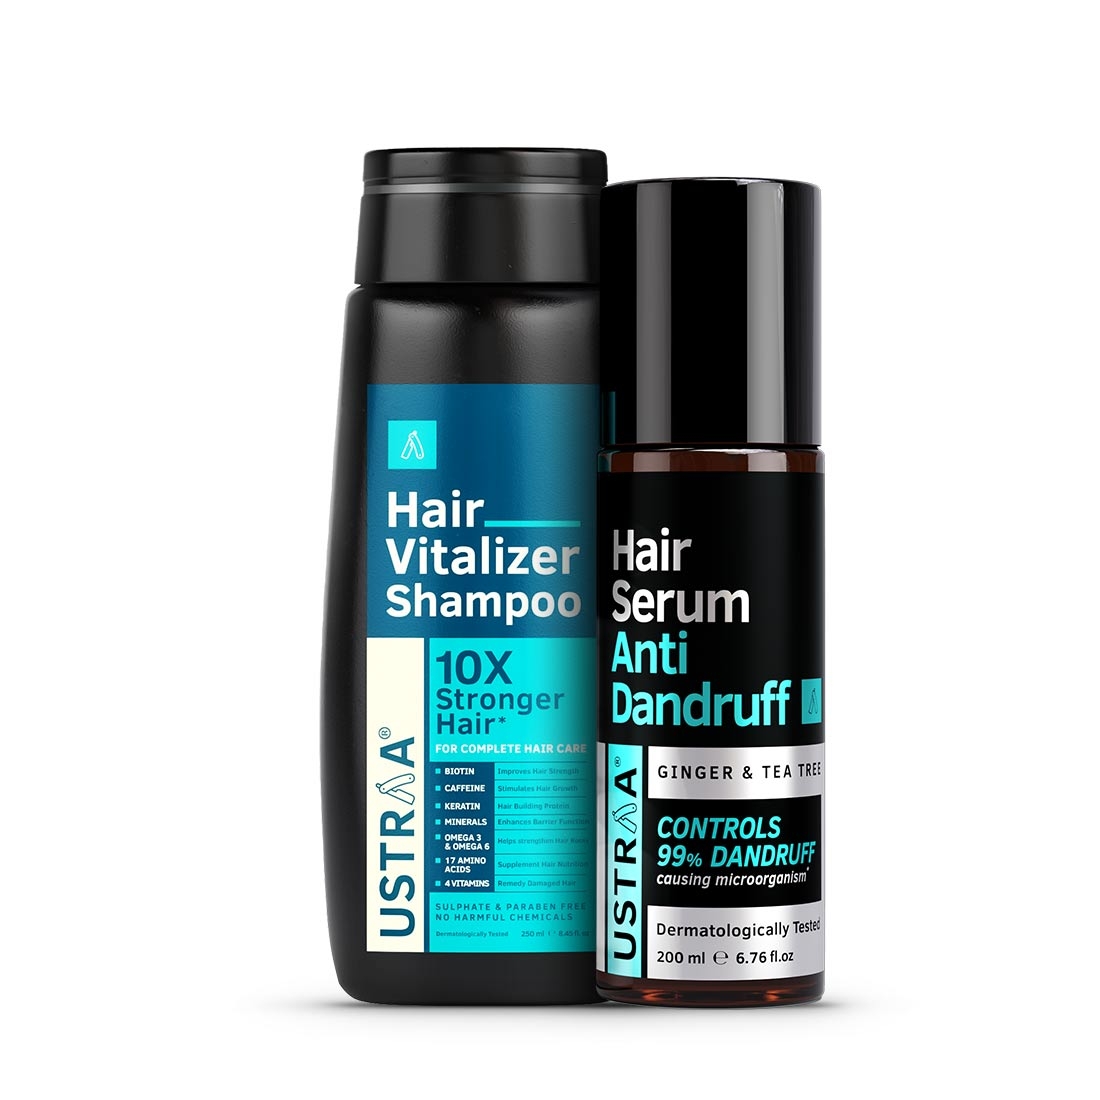 Ustraa | Ustraa Hair Vitalizer Shampoo - 250ml & Anti Dandruff Hair Serum - 200ml